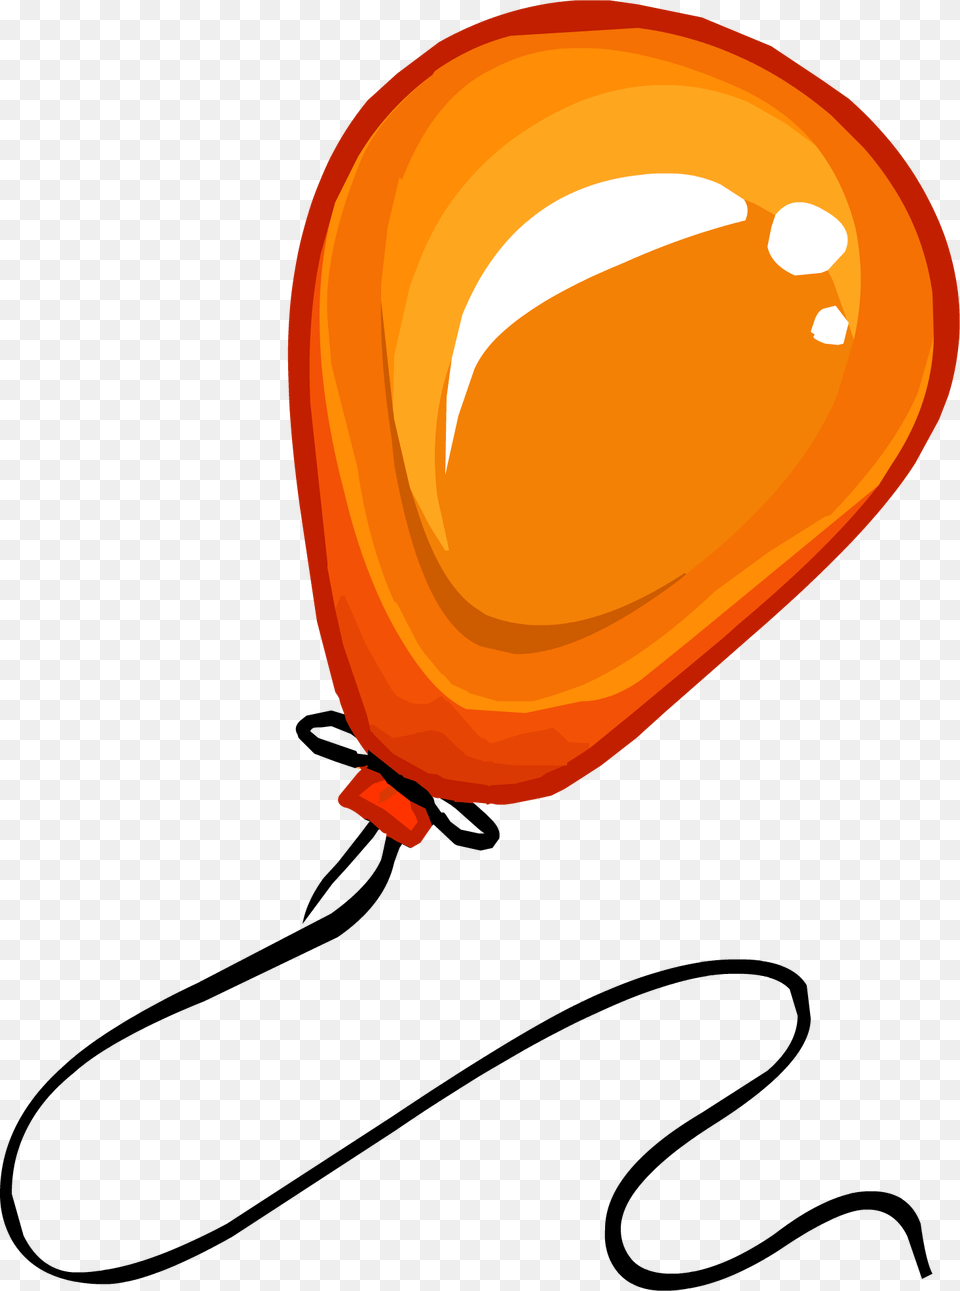 Official Club Penguin Online Wiki Orange Balloon, Light, Lighting Png